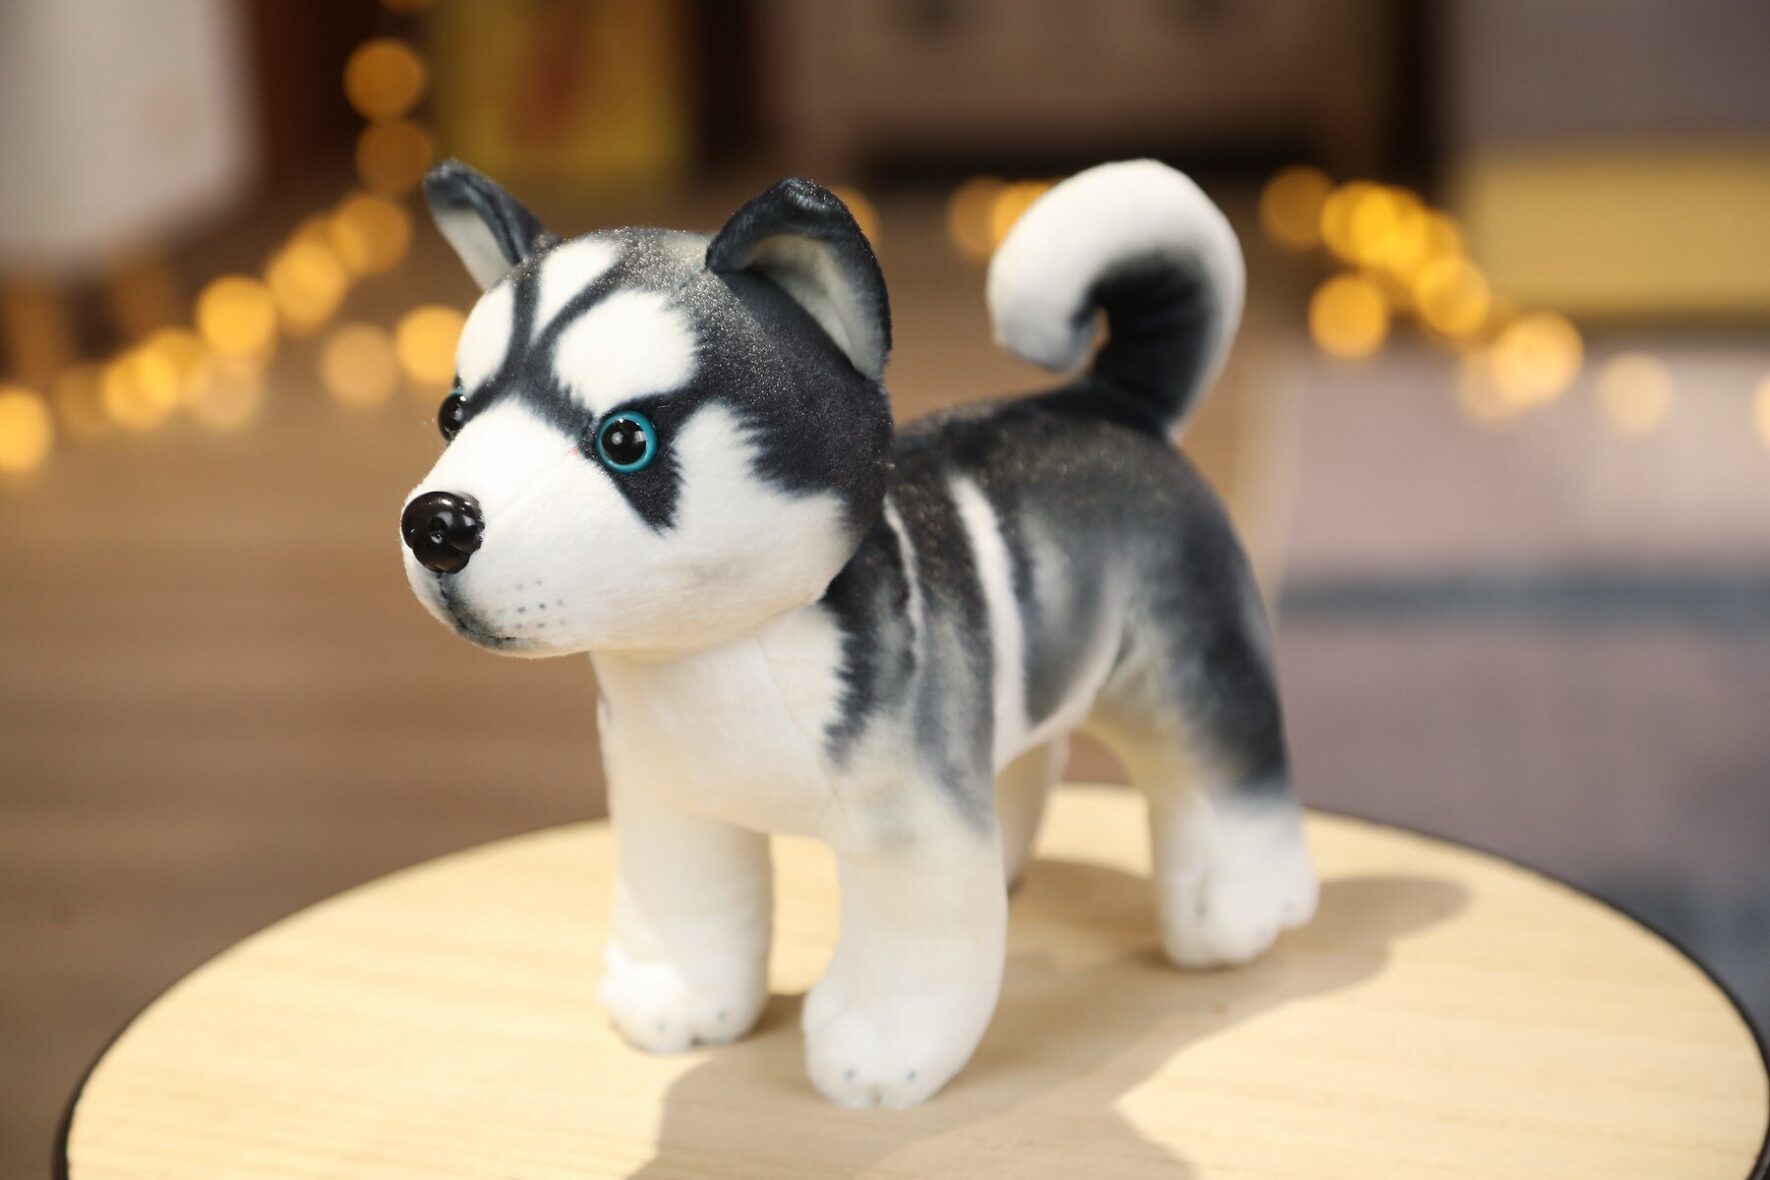 Husky Dog Soft Stuffed Plush Toy